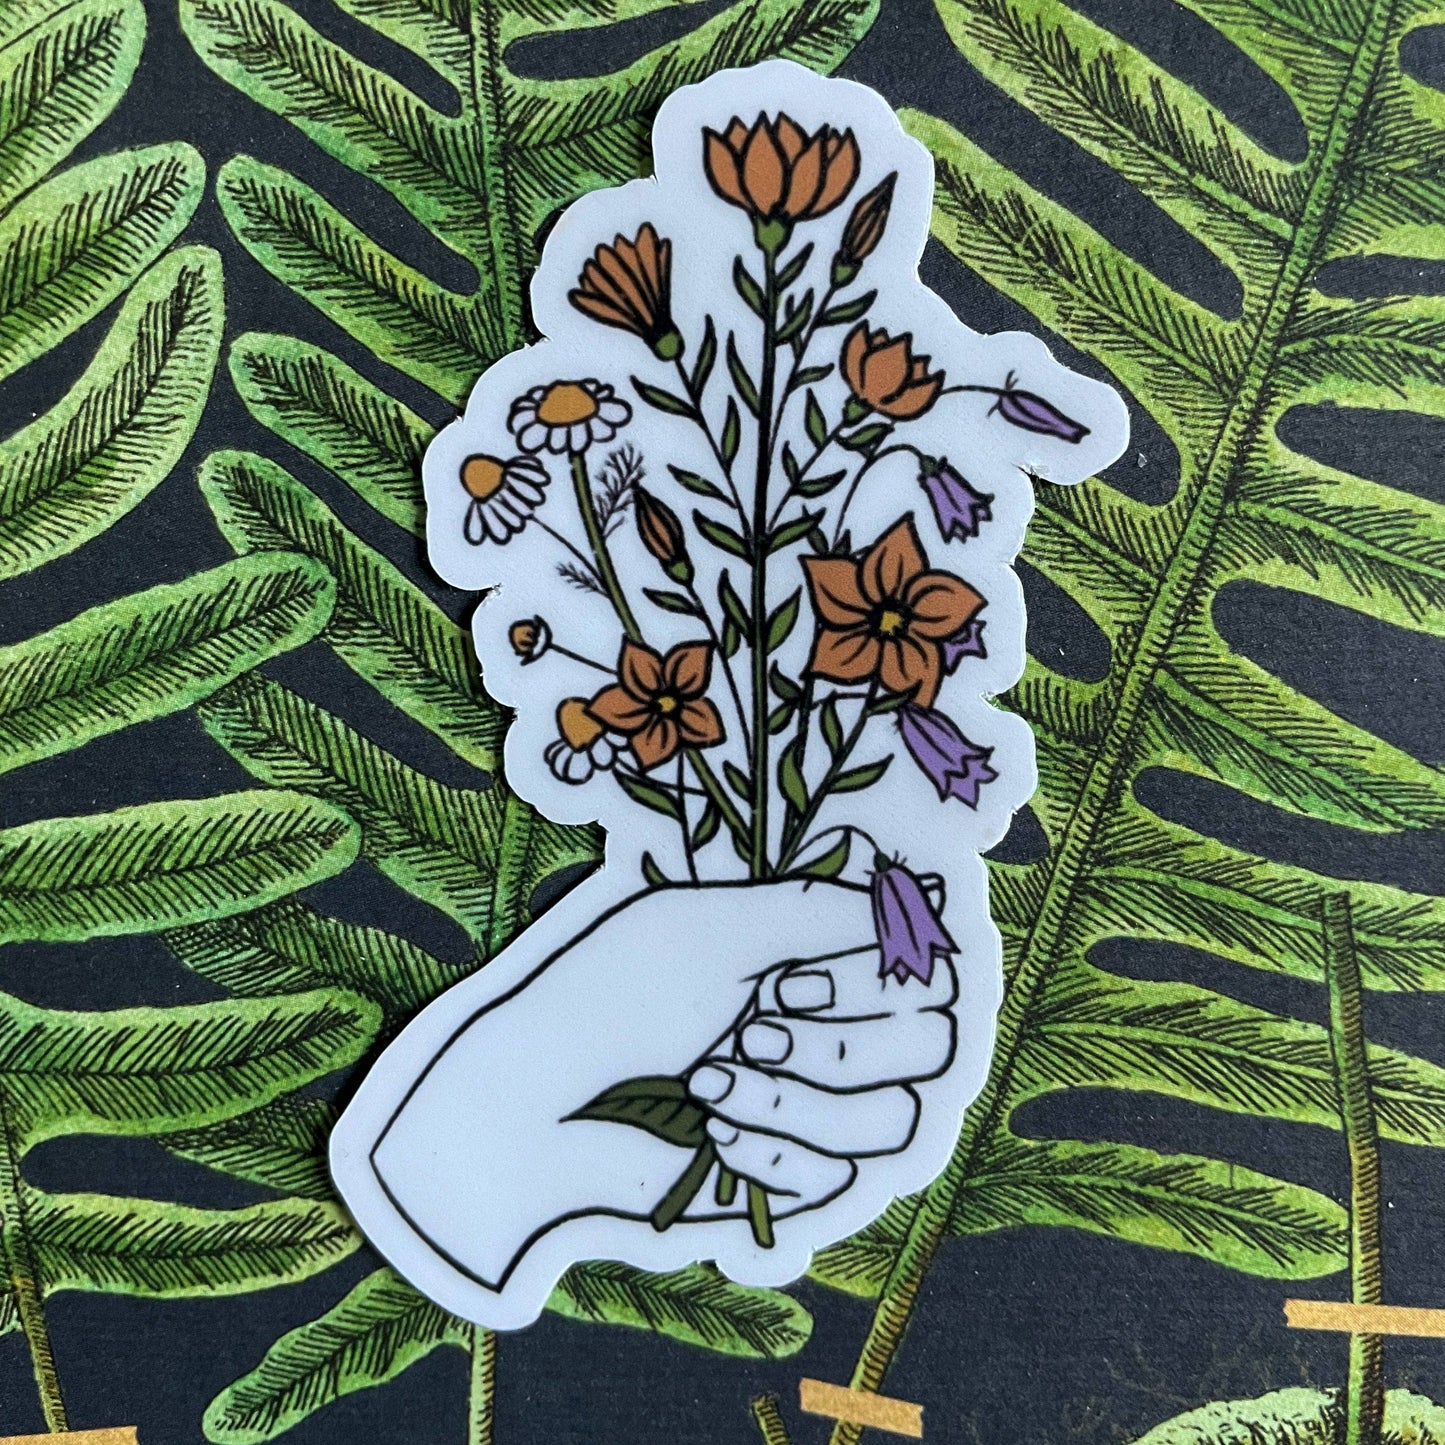 Lunar Splendor - Bouquet in Hand Sticker